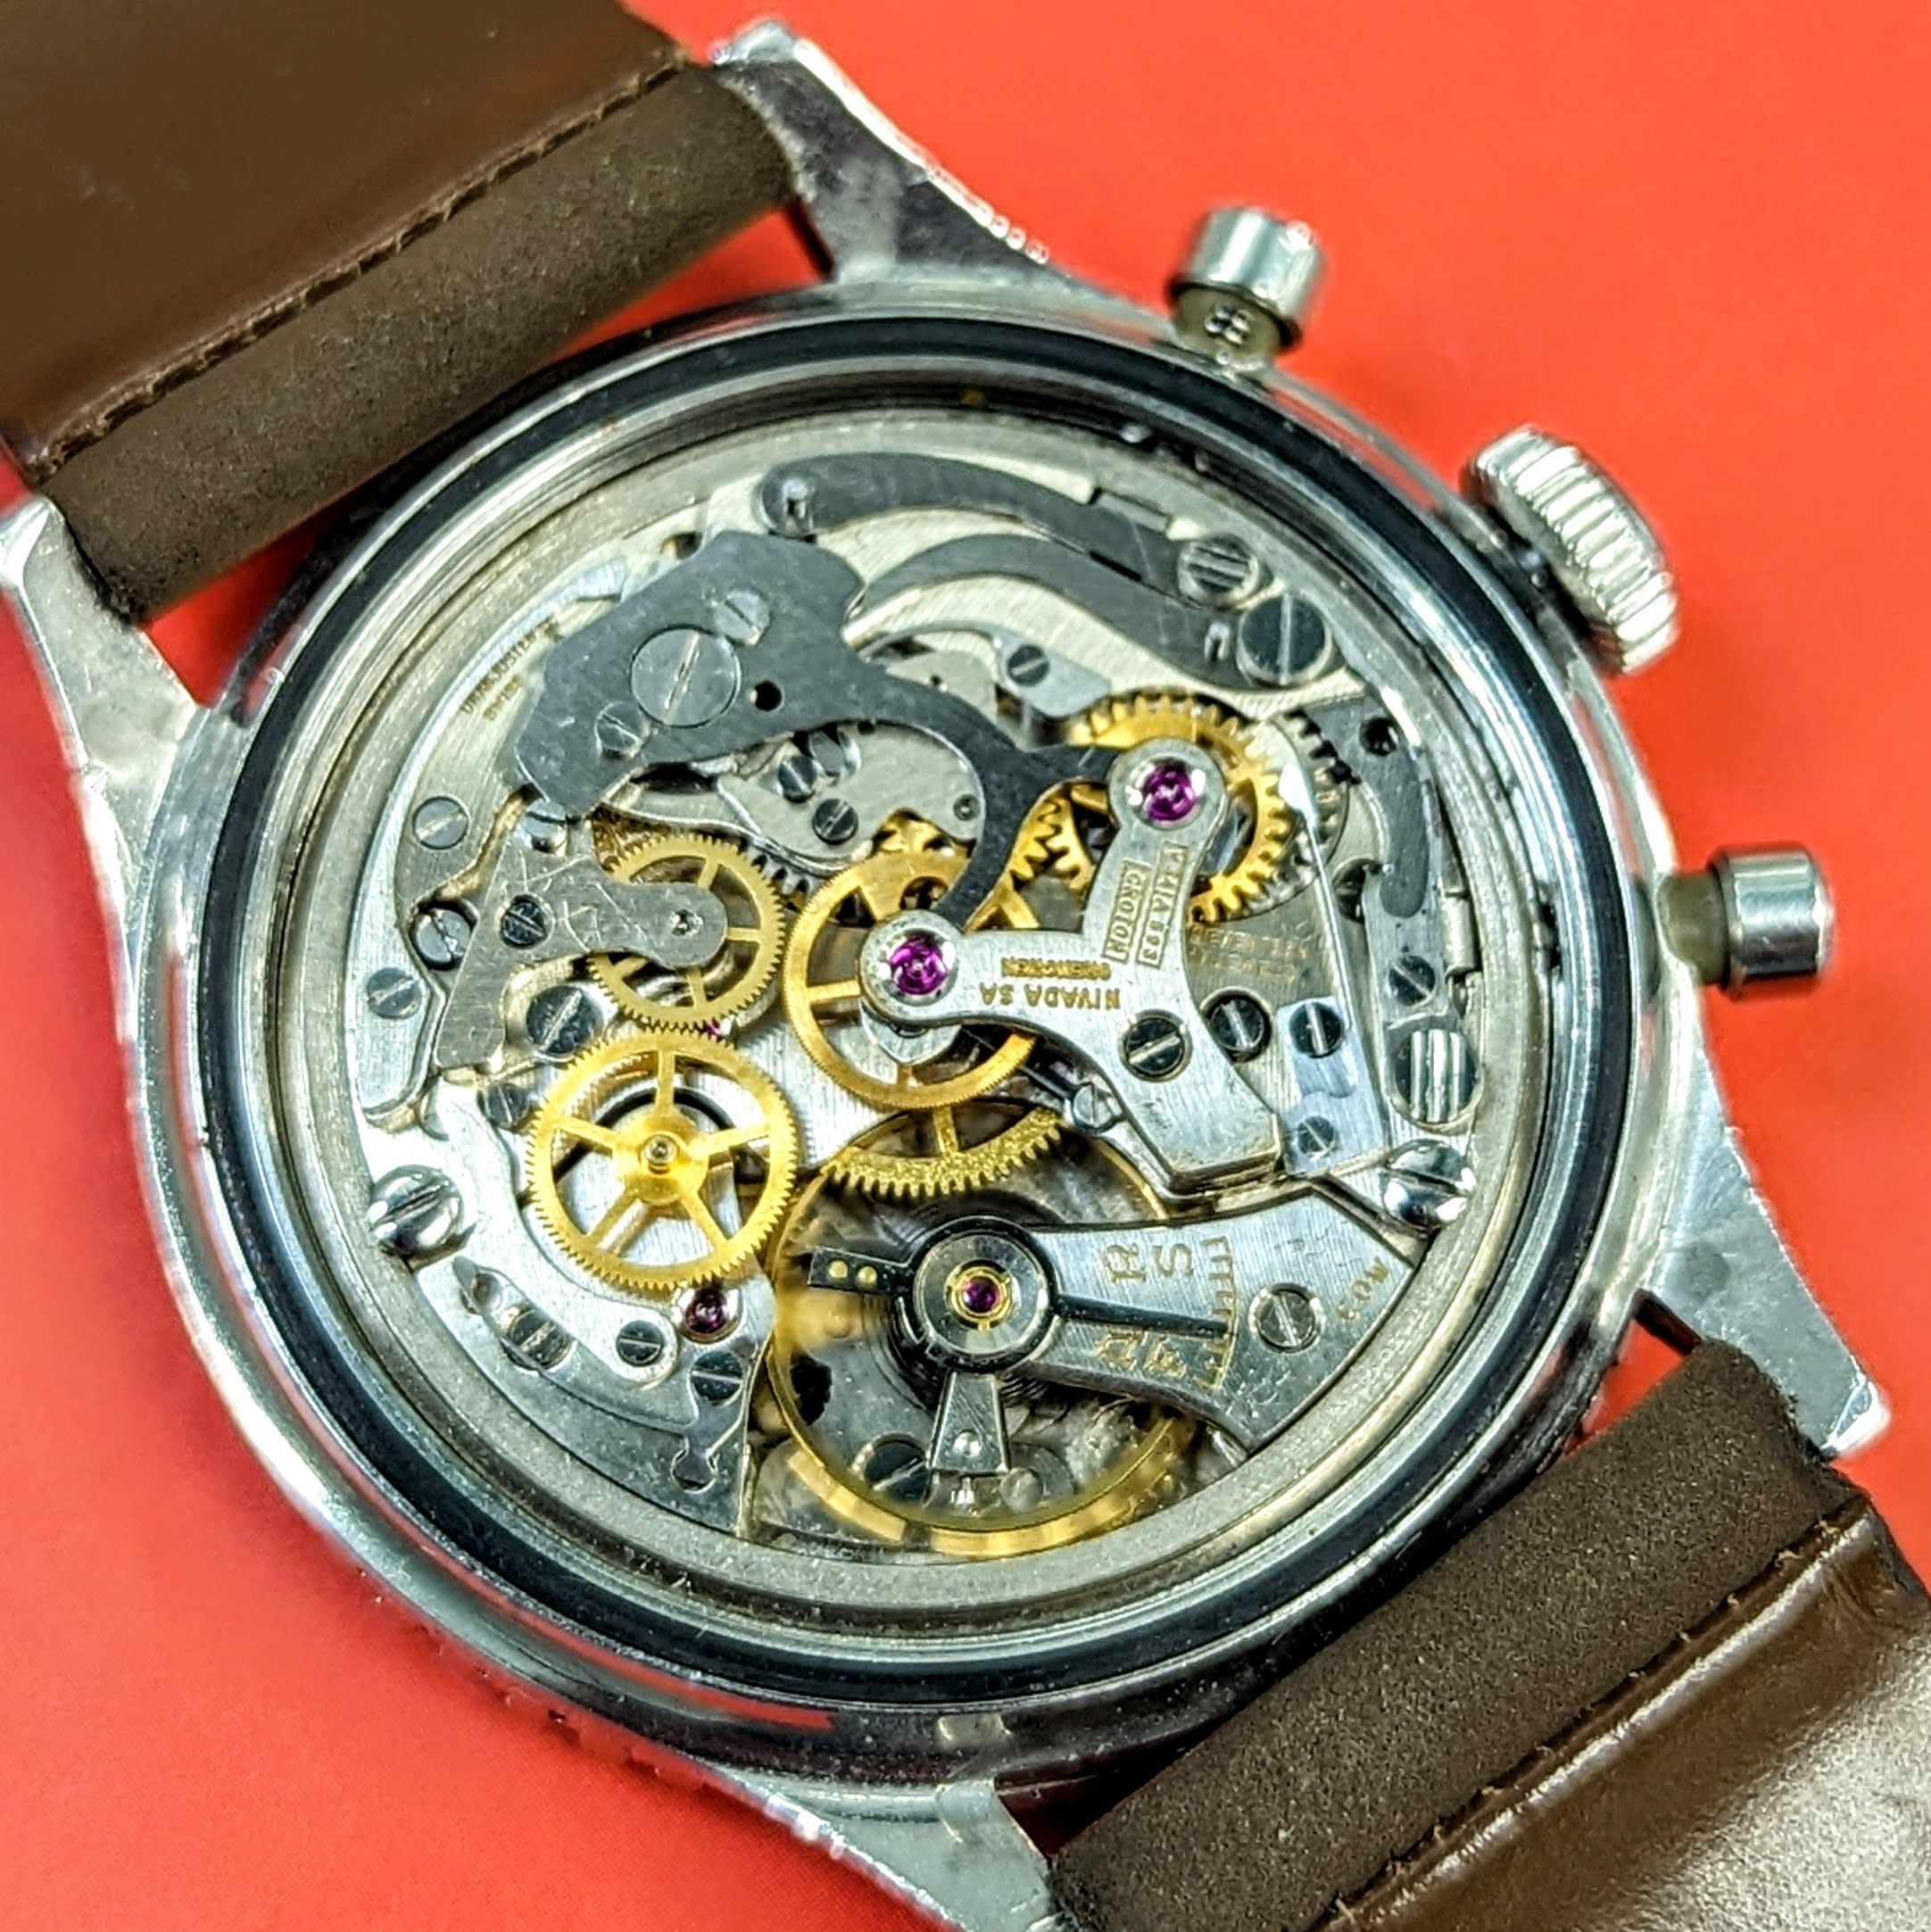 1961 CROTON Nivada Grenchen Chronograph Aviator Sea Diver Watch Venus 210 Chronomaster Wristwatch